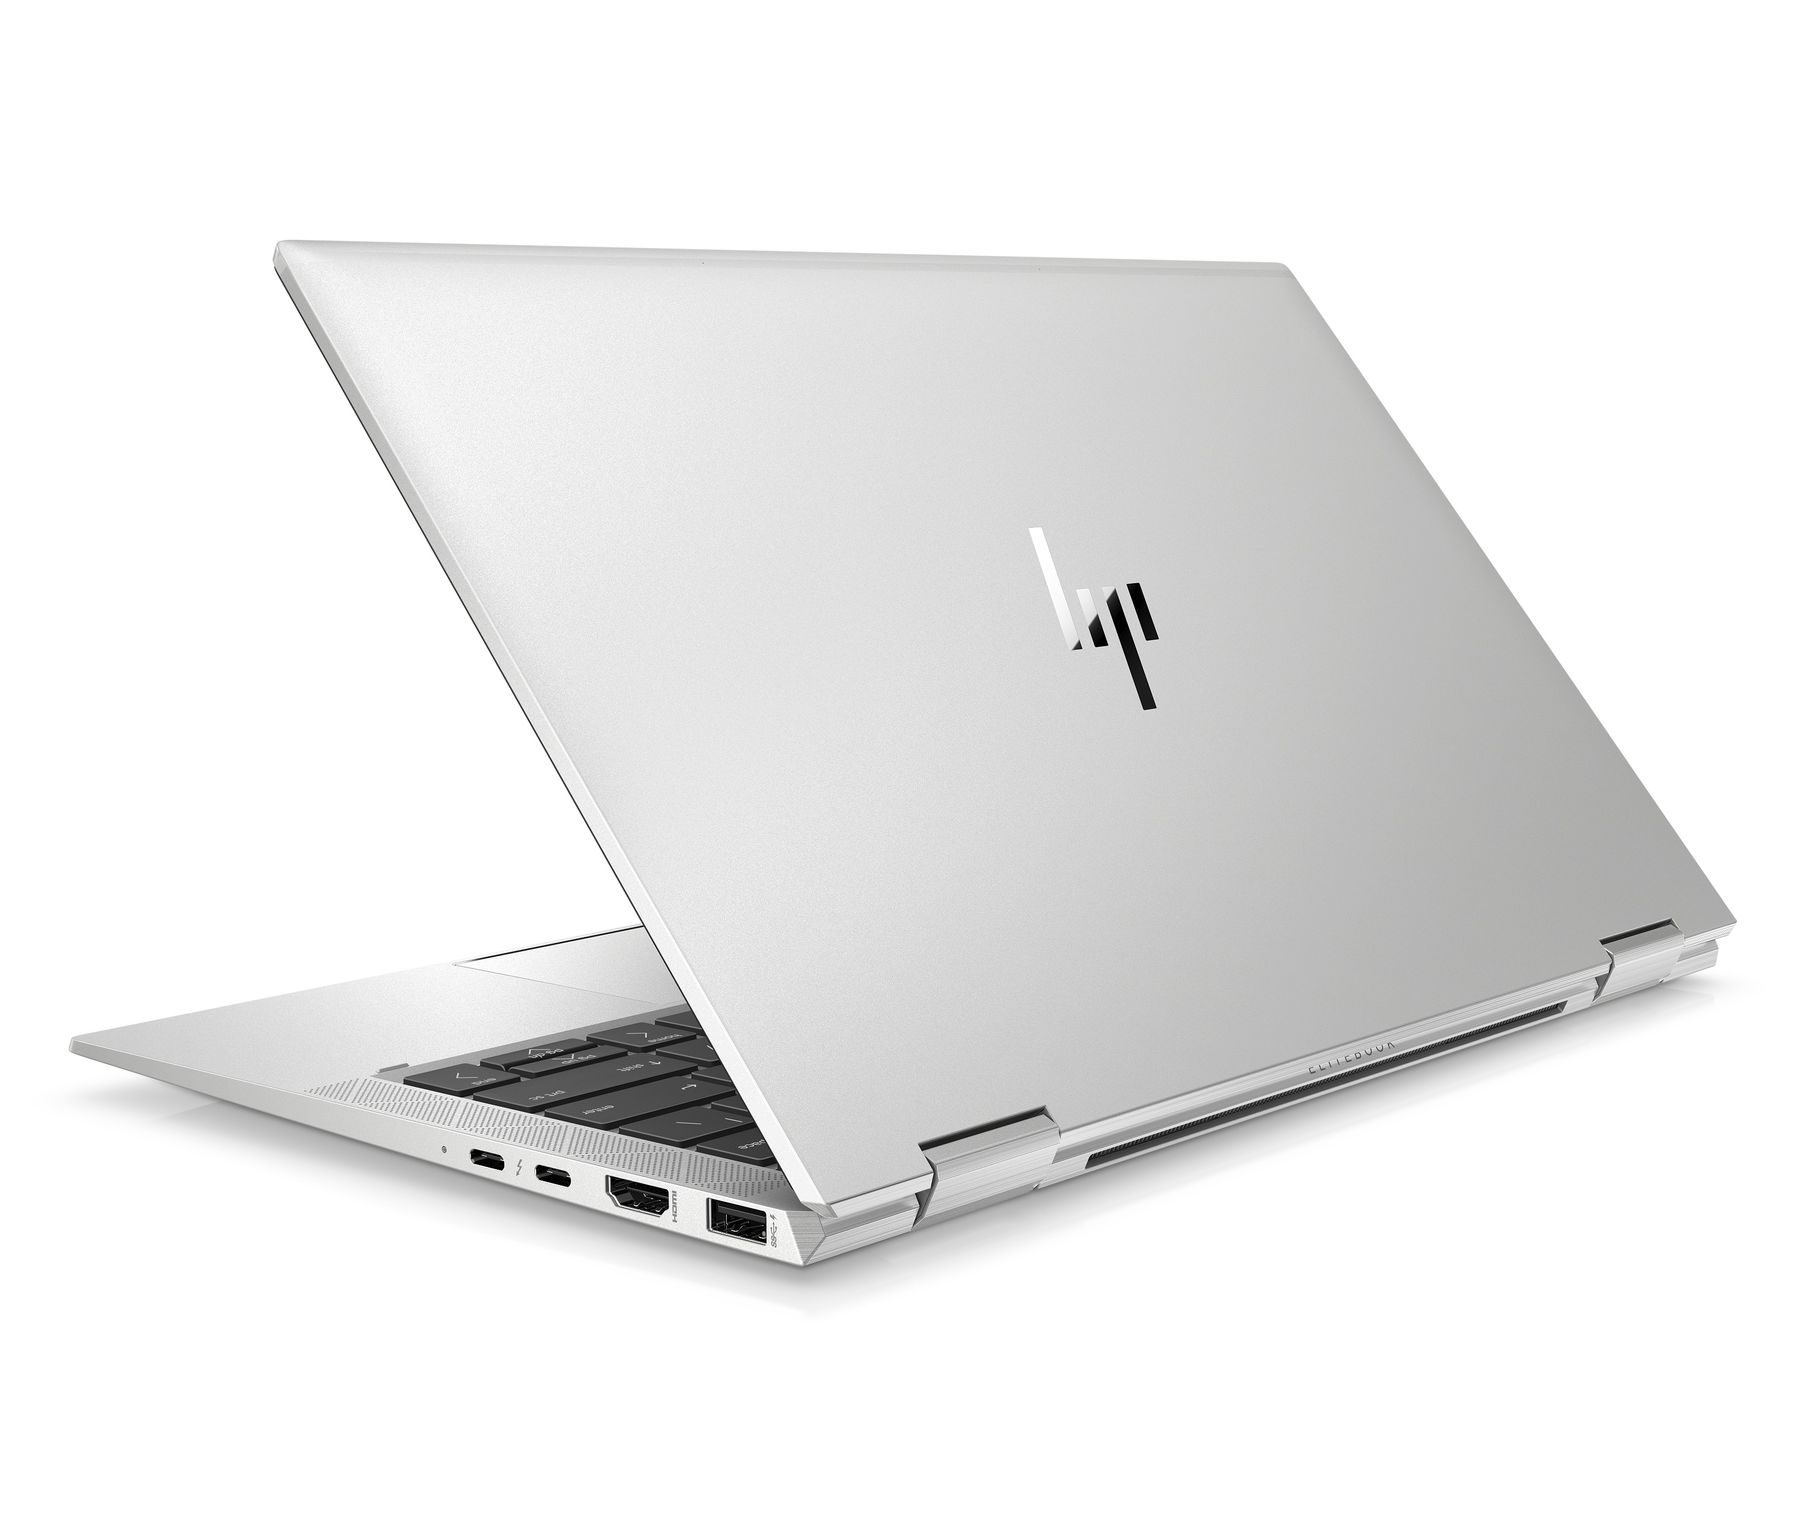 HP Elitebook x360 1030 G7 Notebook PC